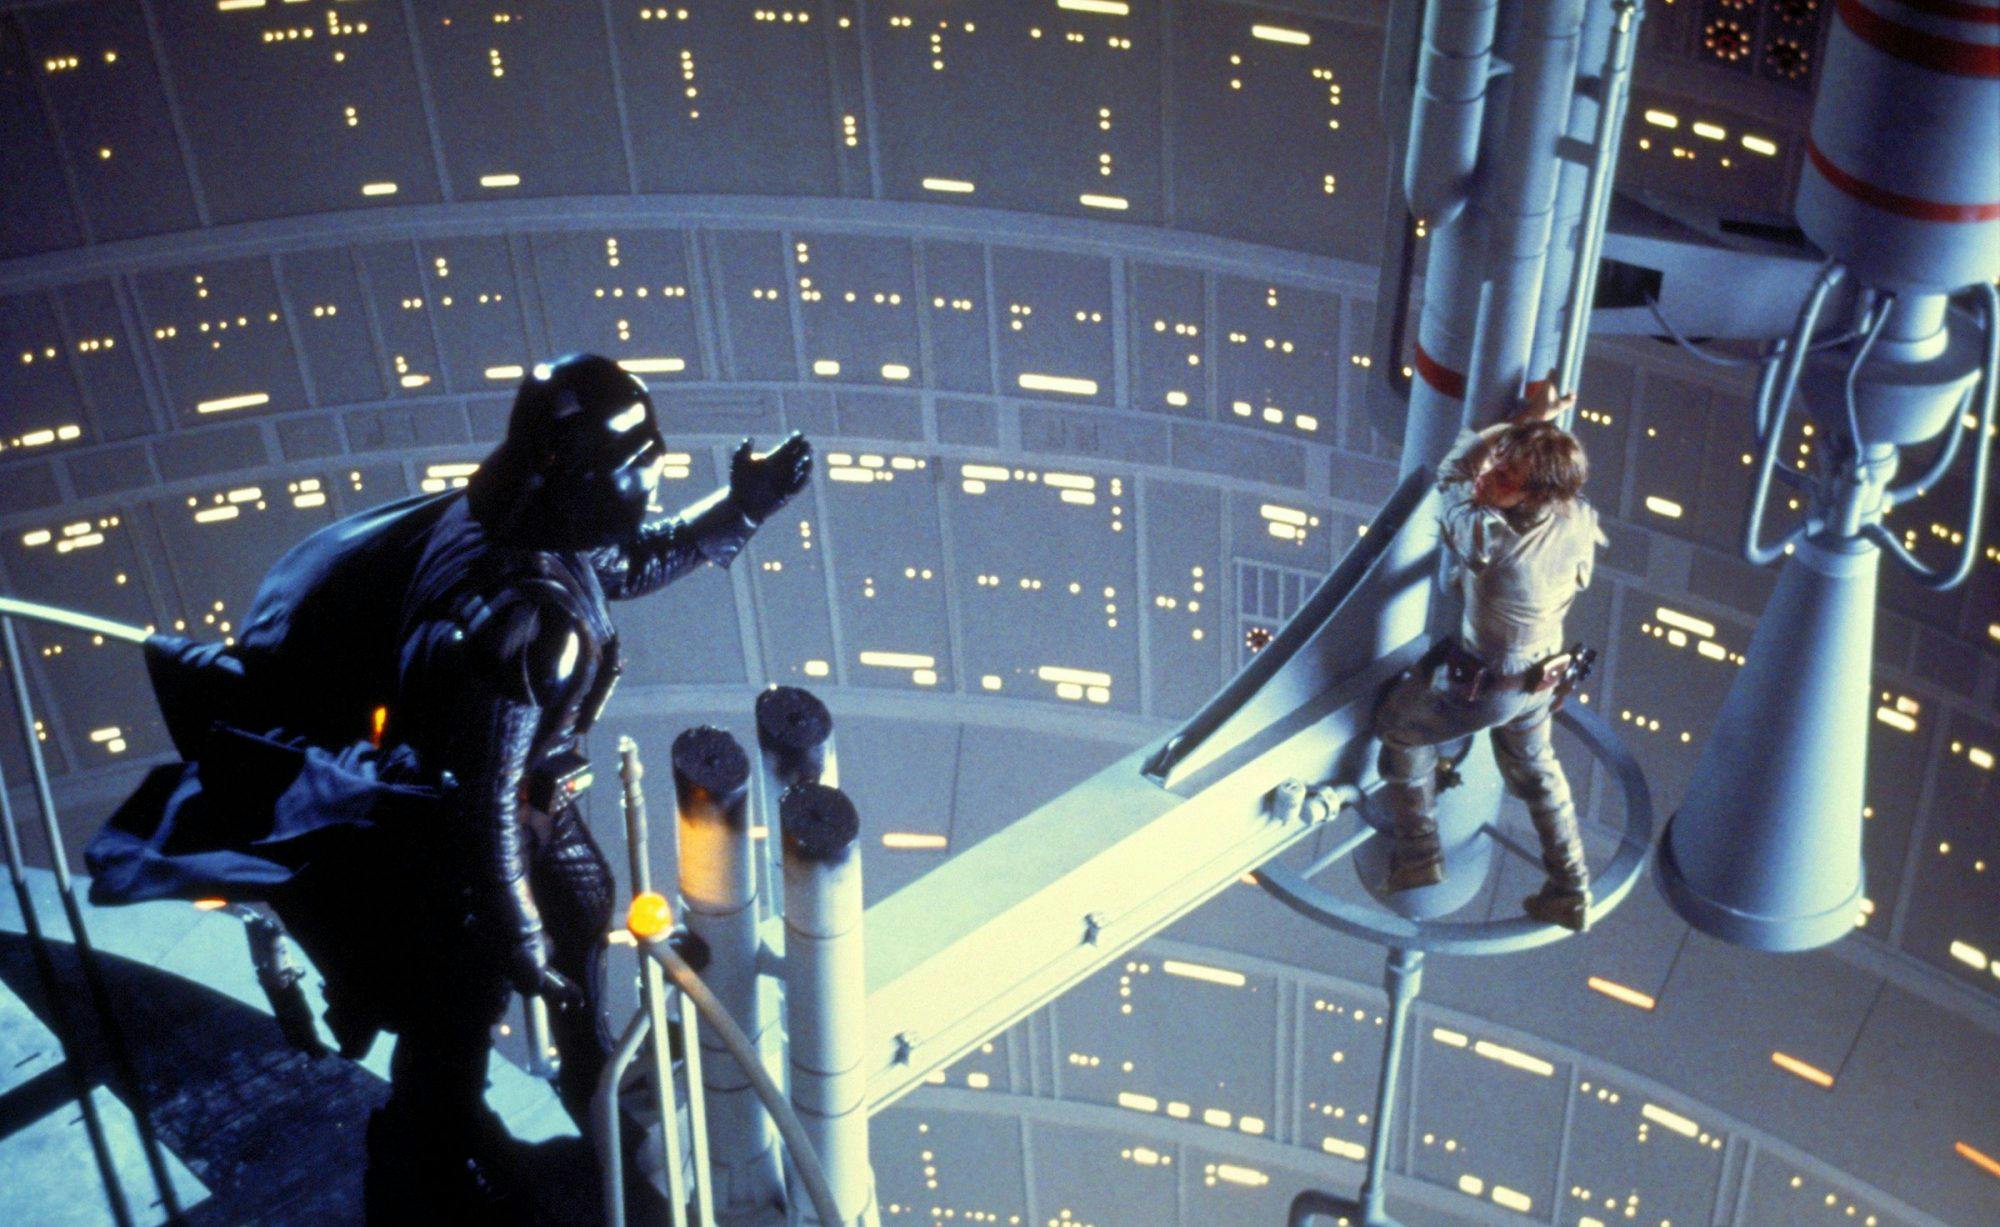 Darth Vader asking Luke to join him on the Dark Side